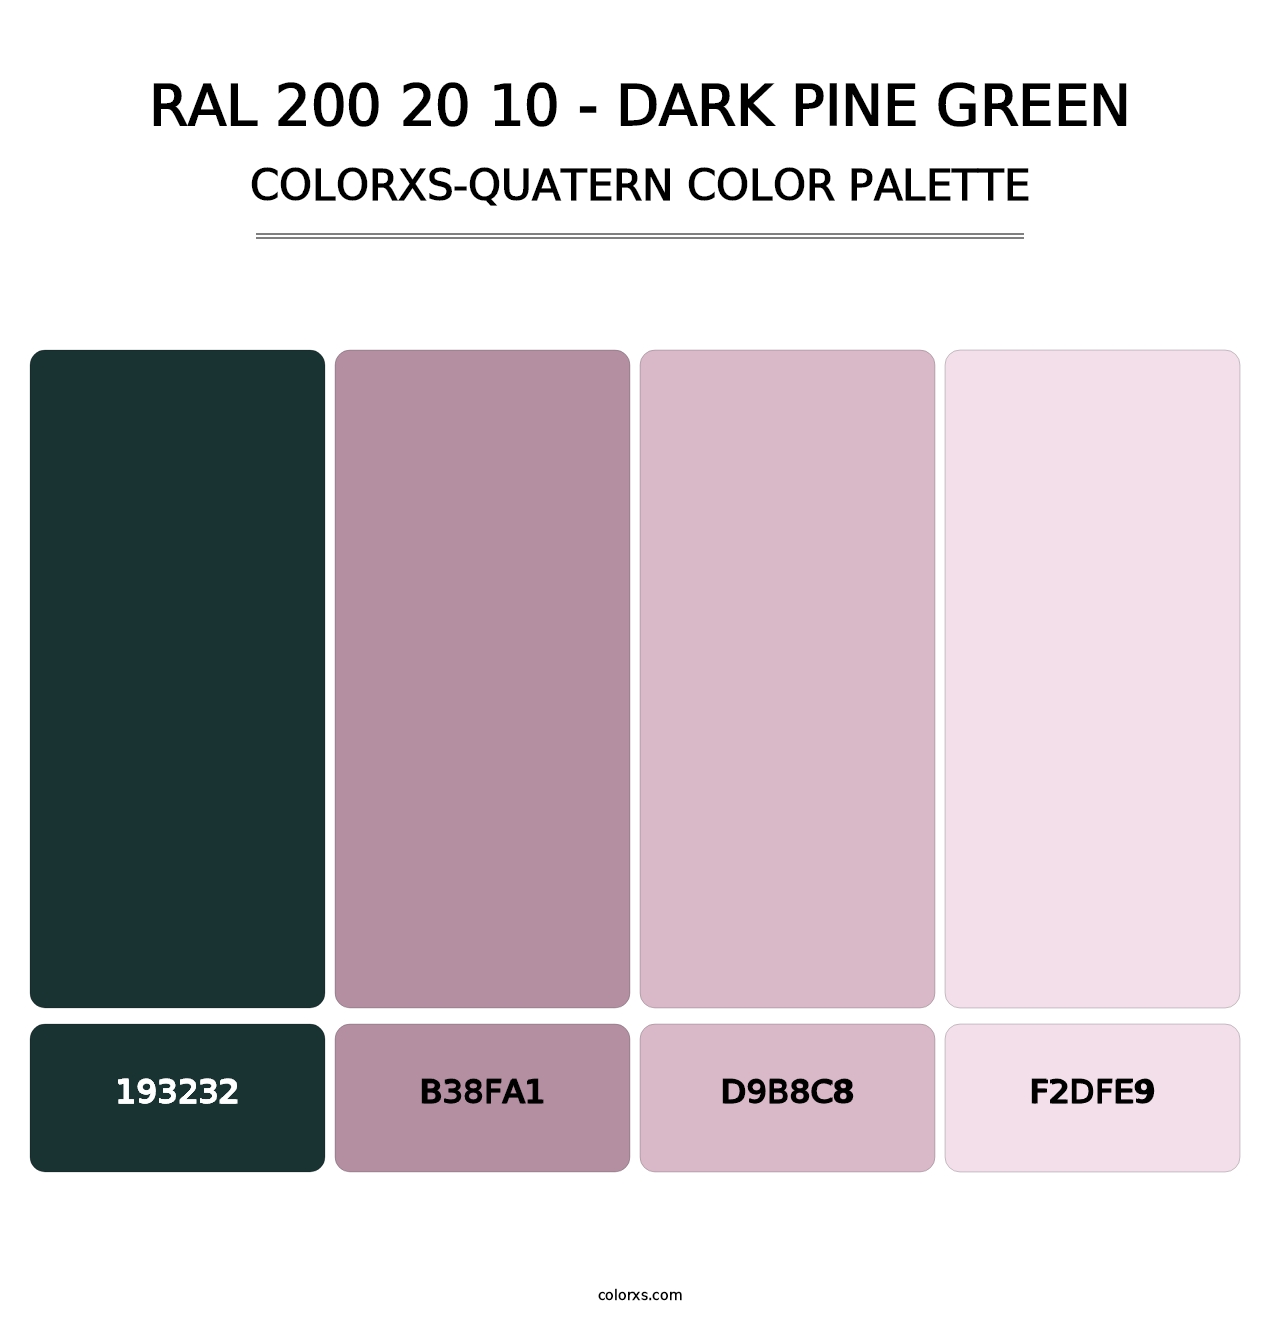 RAL 200 20 10 - Dark Pine Green - Colorxs Quatern Palette